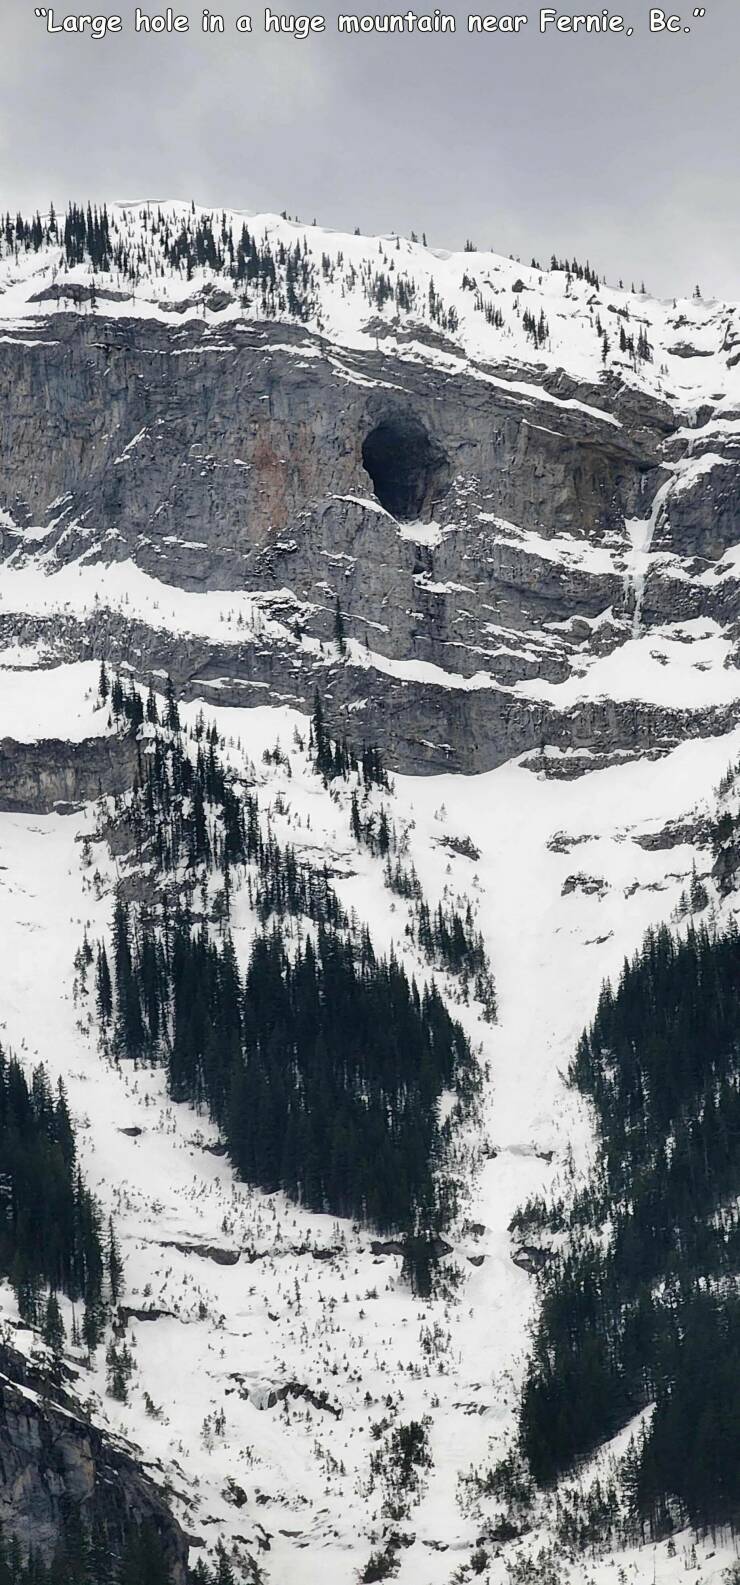 fun randoms - funny photos - snow - "Large hole in a huge mountain near Fernie, Bc."